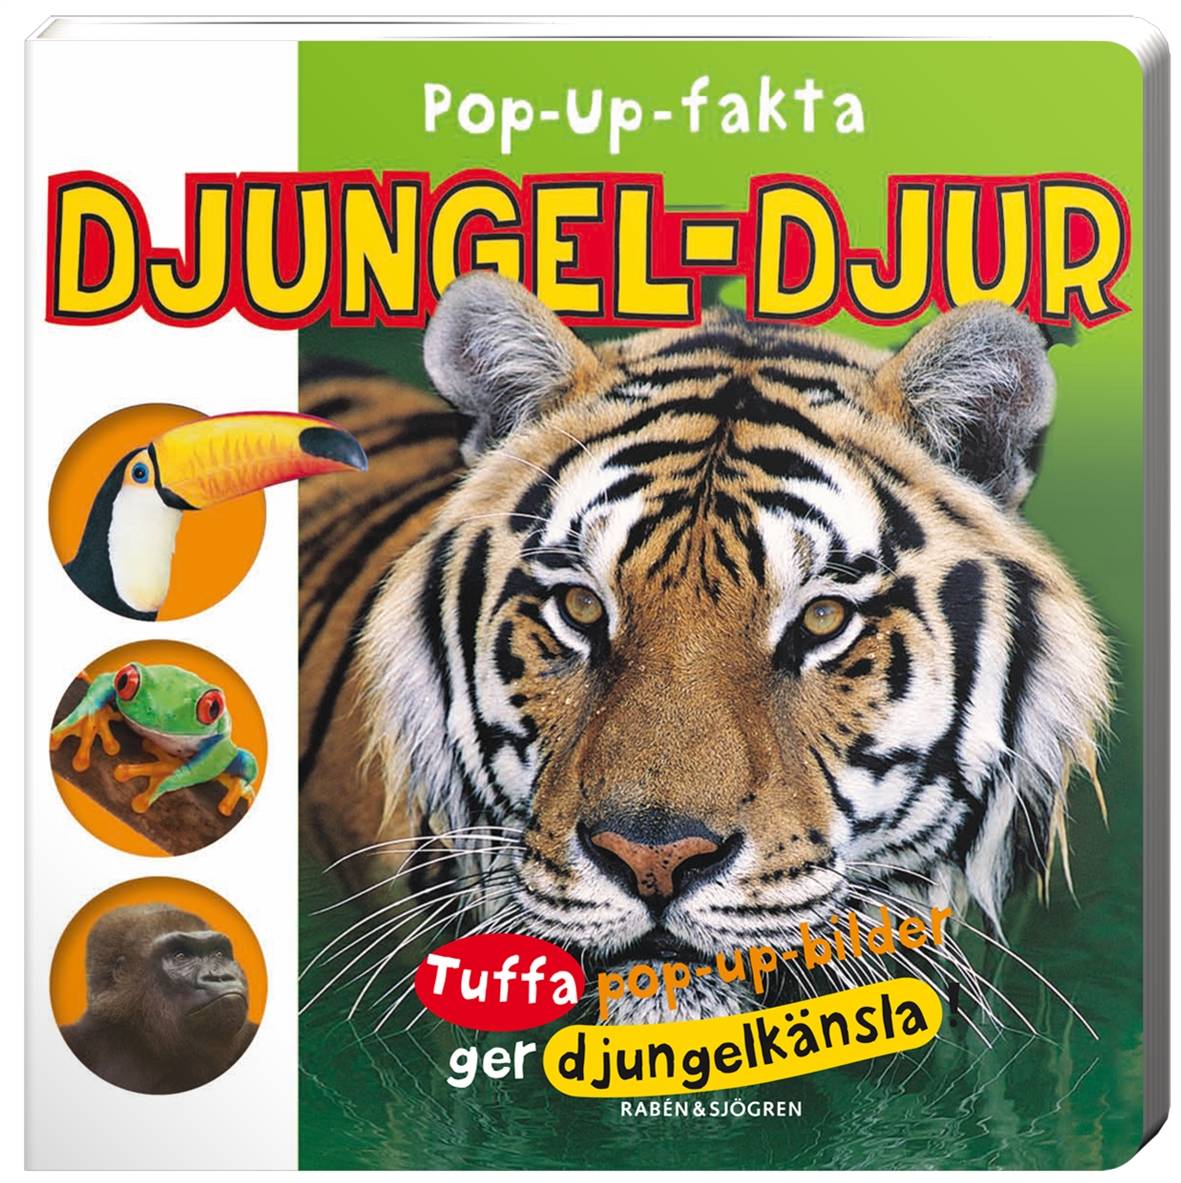 Pop-up-fakta Djungel-djur : tuffa pop-up-bilder ger djungelkänsla!